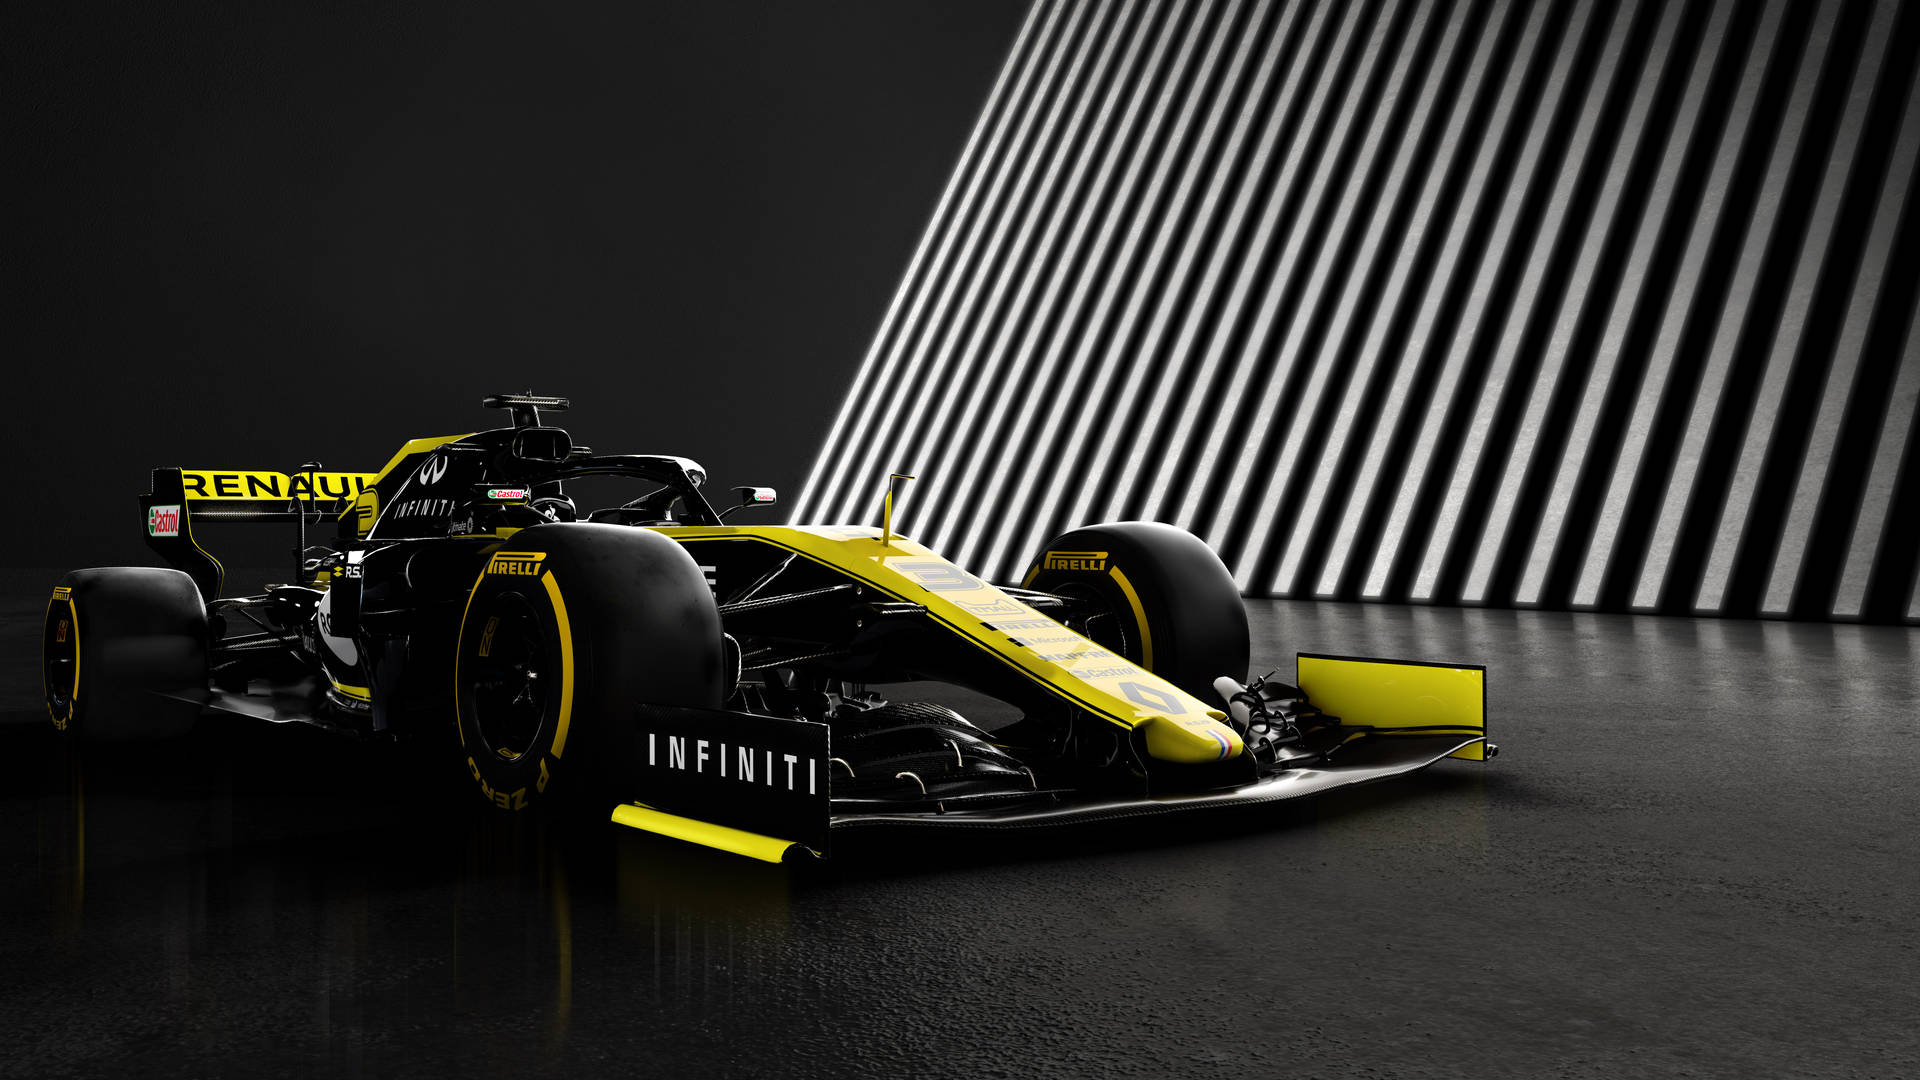 Renaultf1 Team Formel 1 2019 Wallpaper